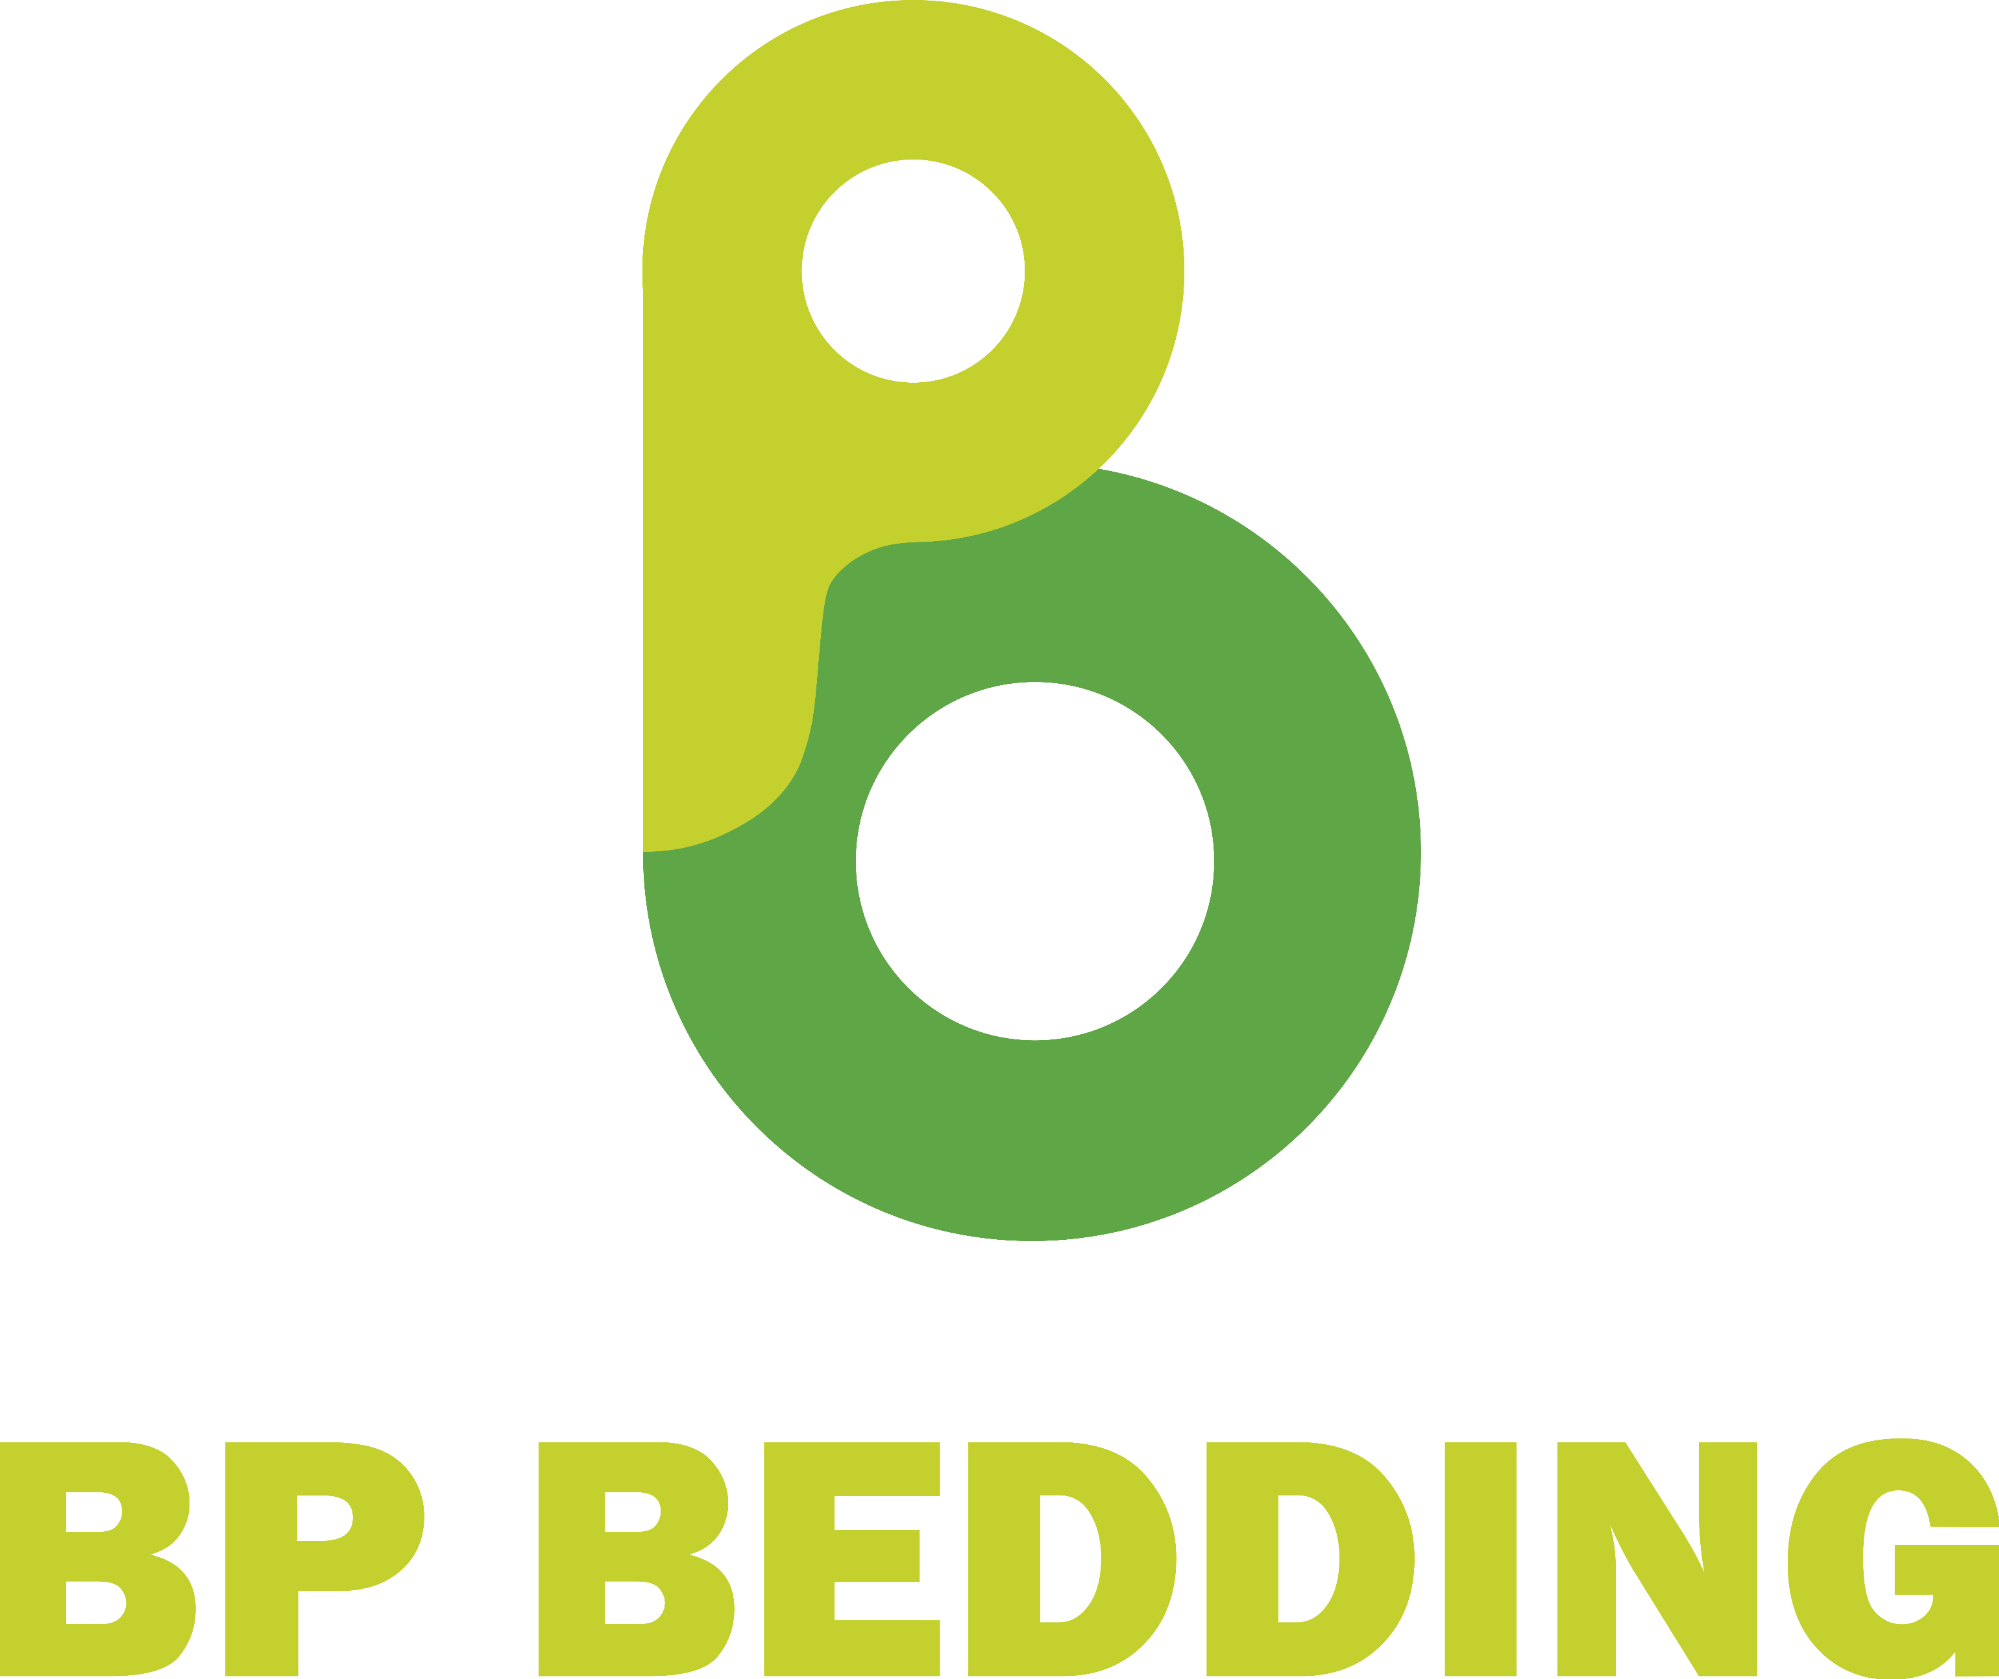 BP Bedding